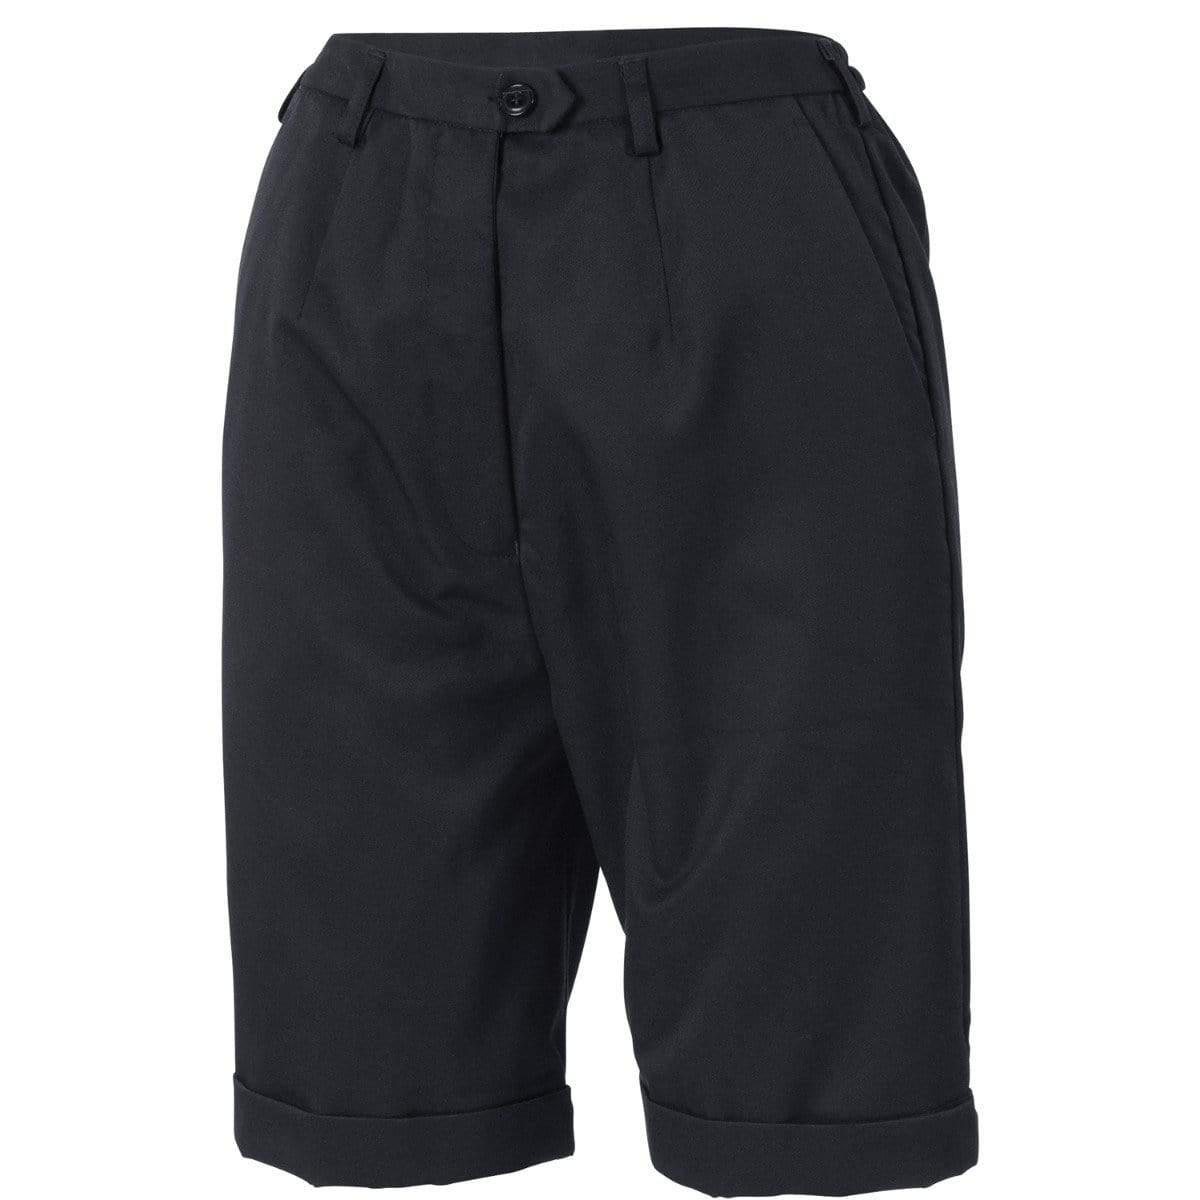 Dnc Workwear Ladies Flat Front Shorts - 4551 Work Wear DNC Workwear Navy 6 